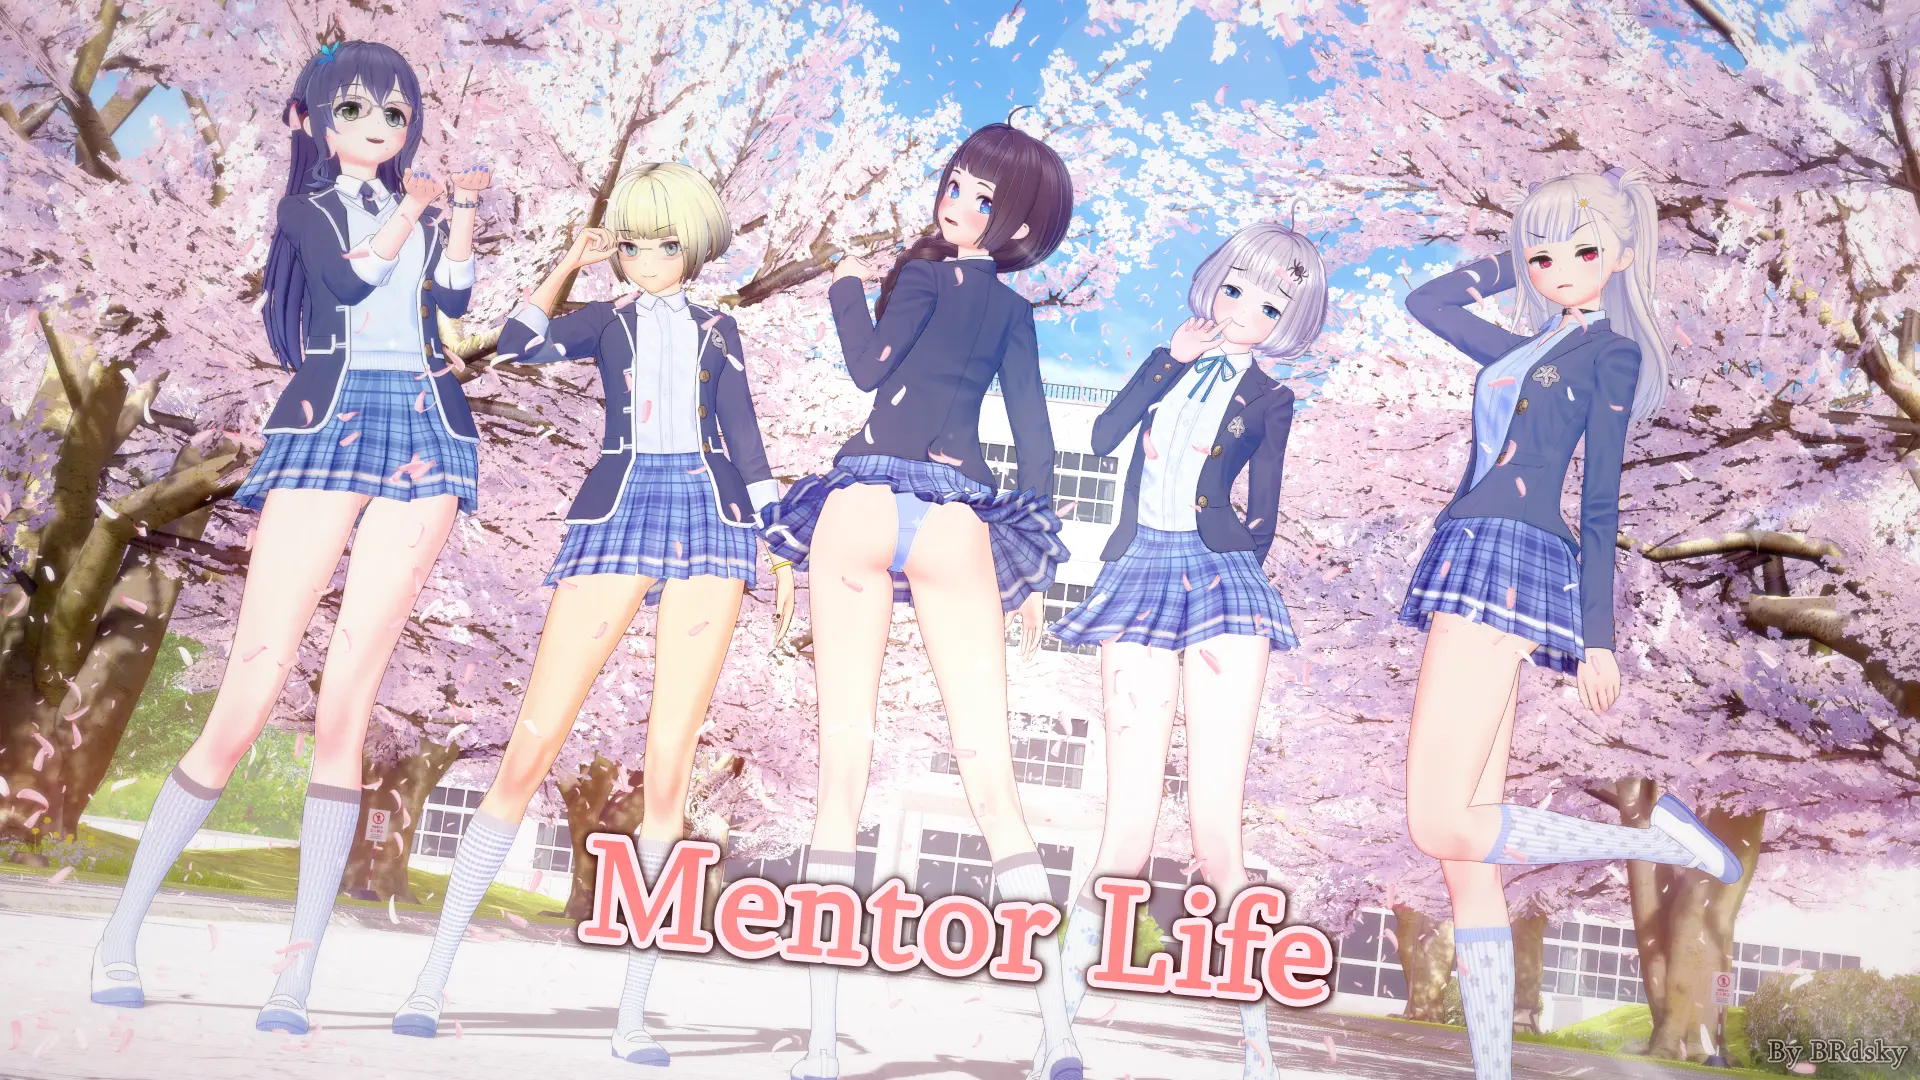 Mentor Life [v0.1] main image